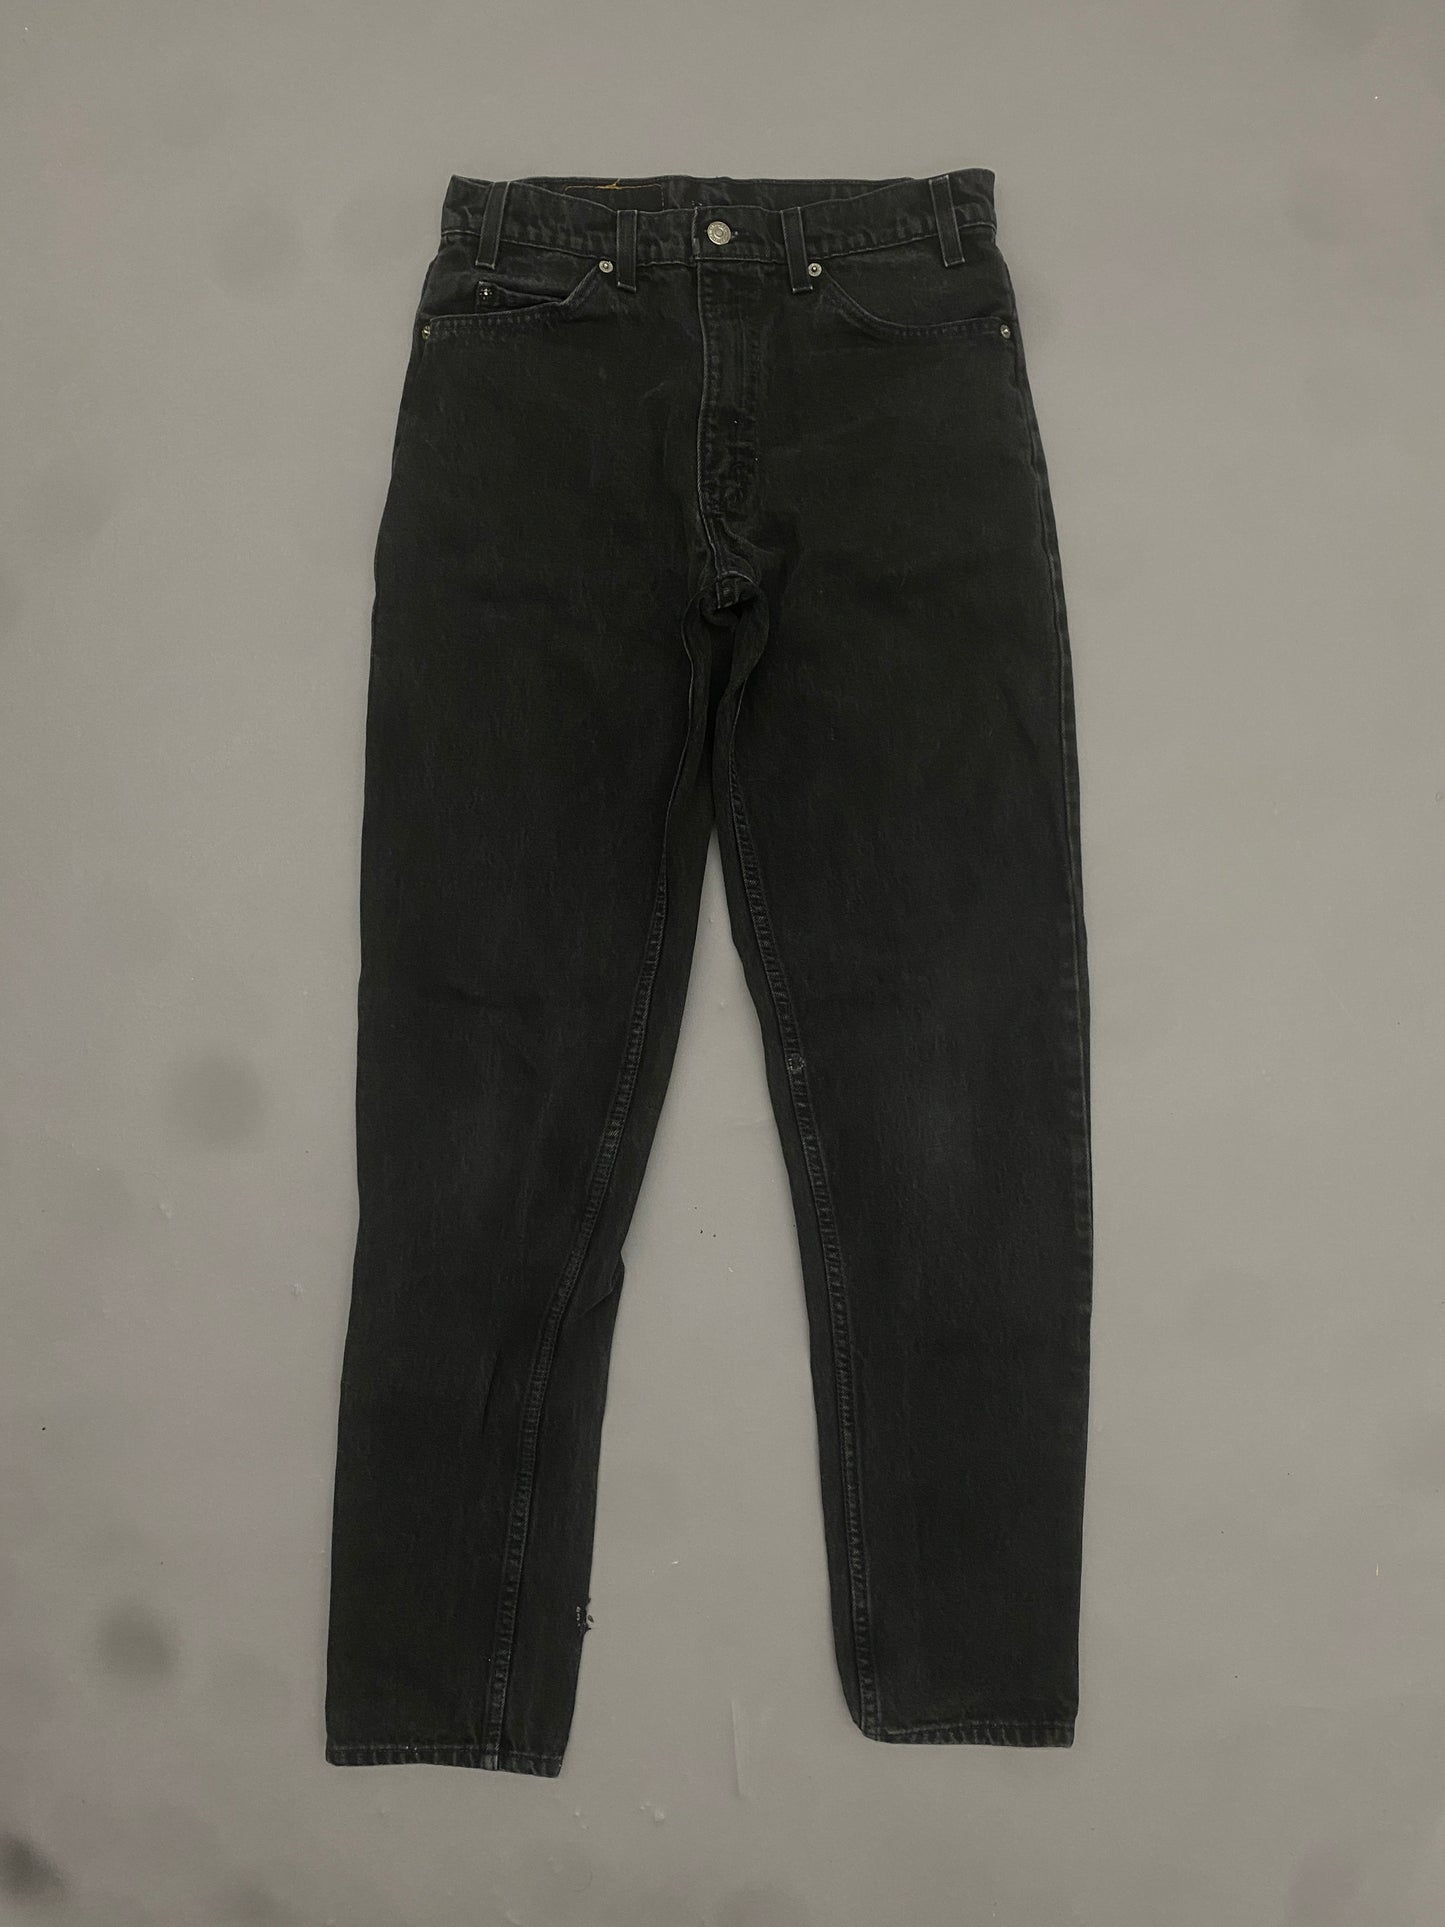 Levis Orange Tab Vintage Jeans - 32 x 34